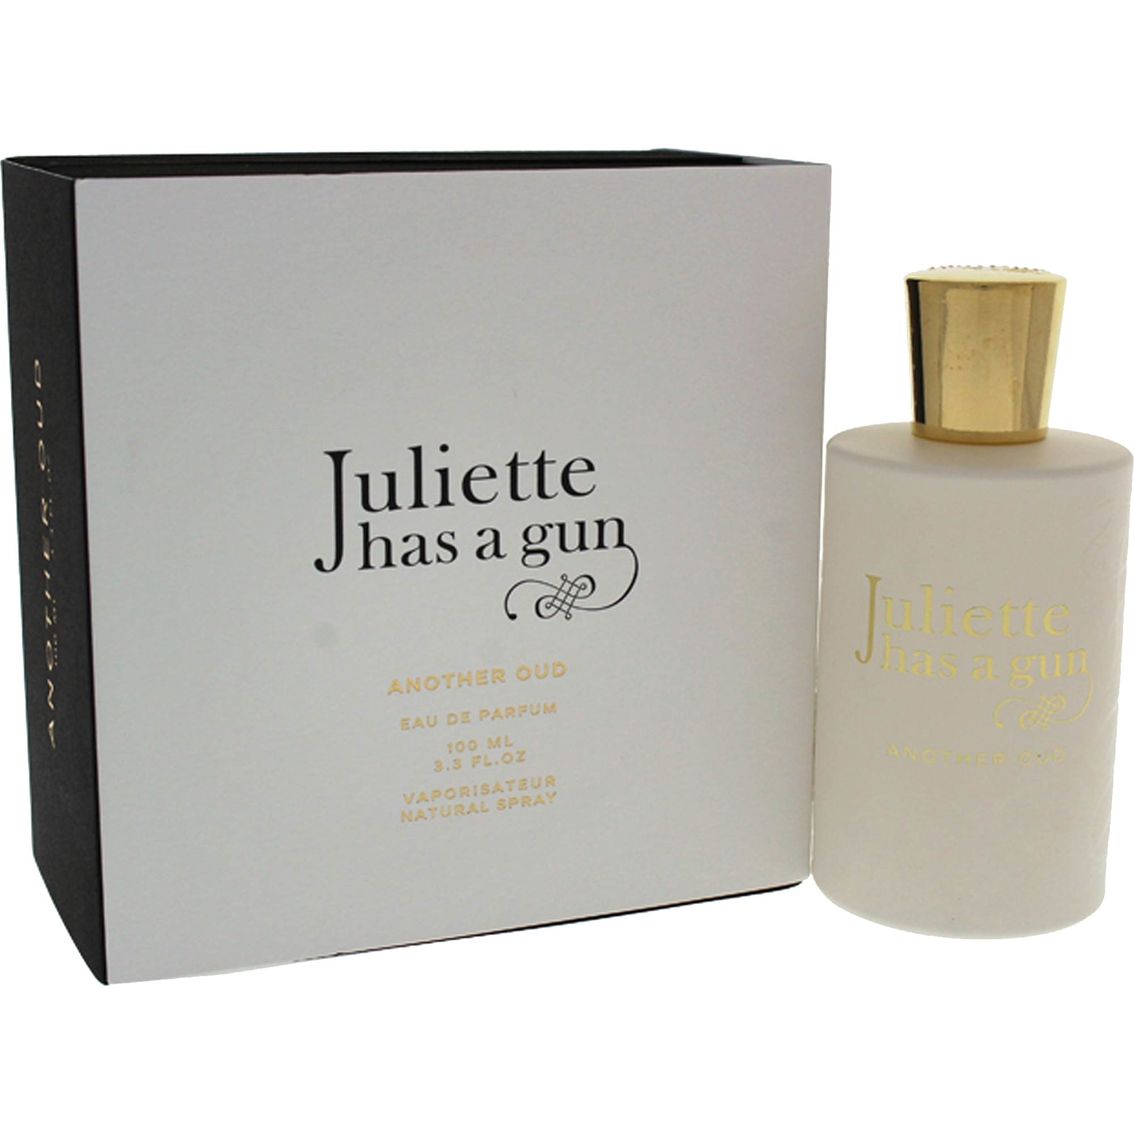 Juliette Has A Gun Another Oud Eau de Parfum Spray - Image 2 of 2